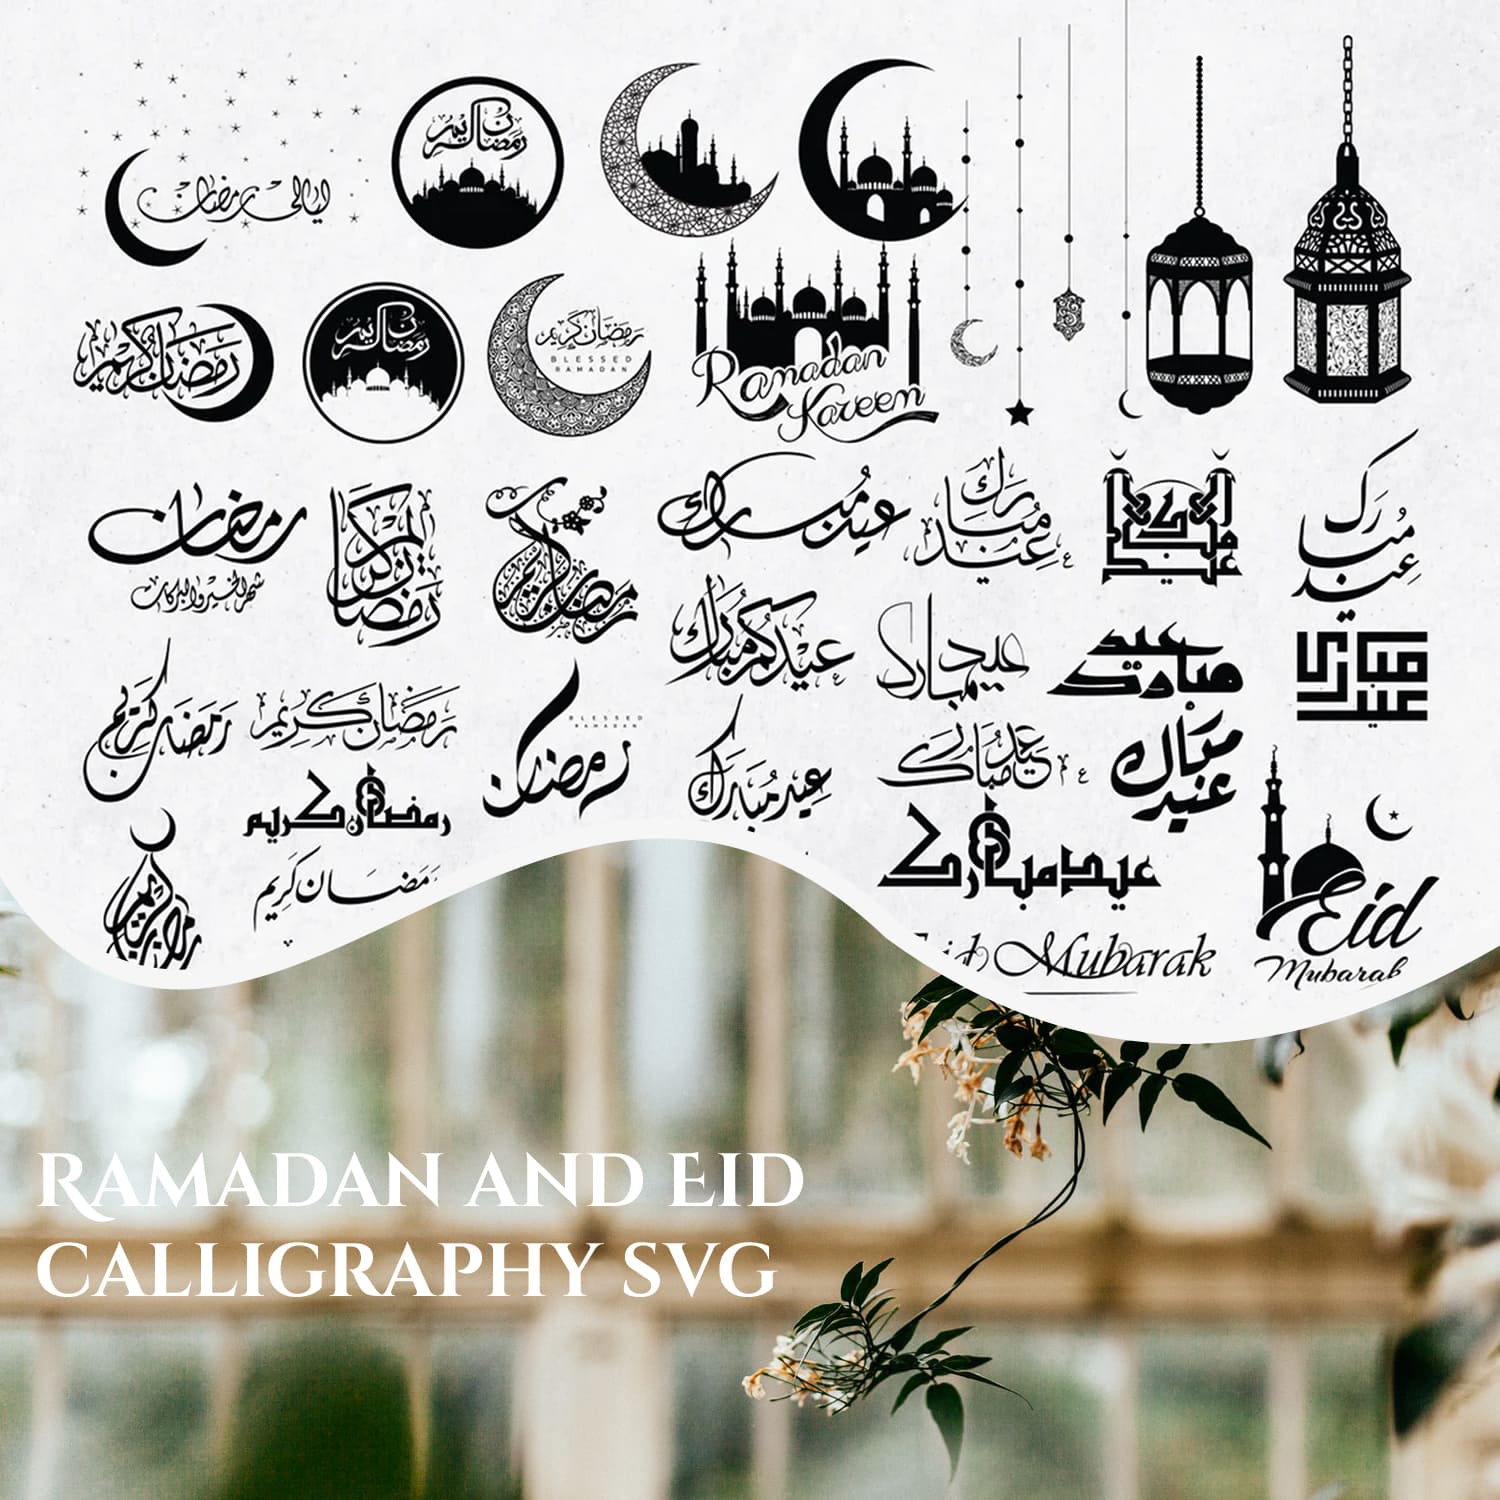 Ramadan and Eid calligraphy svg bundle in arabic.